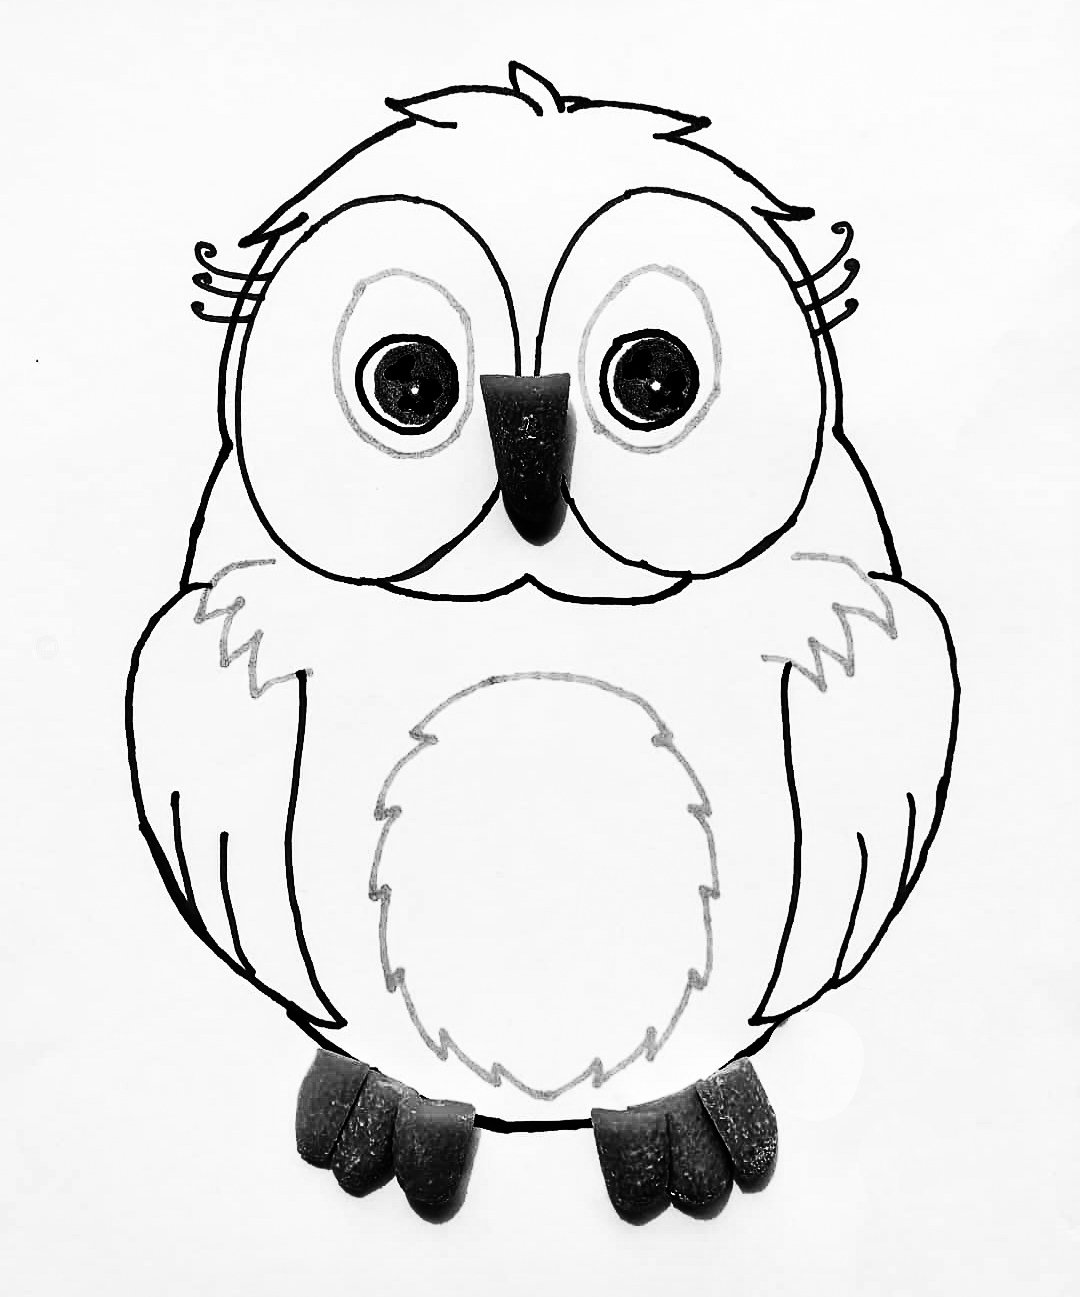 Owl Pencil Drawing by jacksaundersartist on DeviantArt